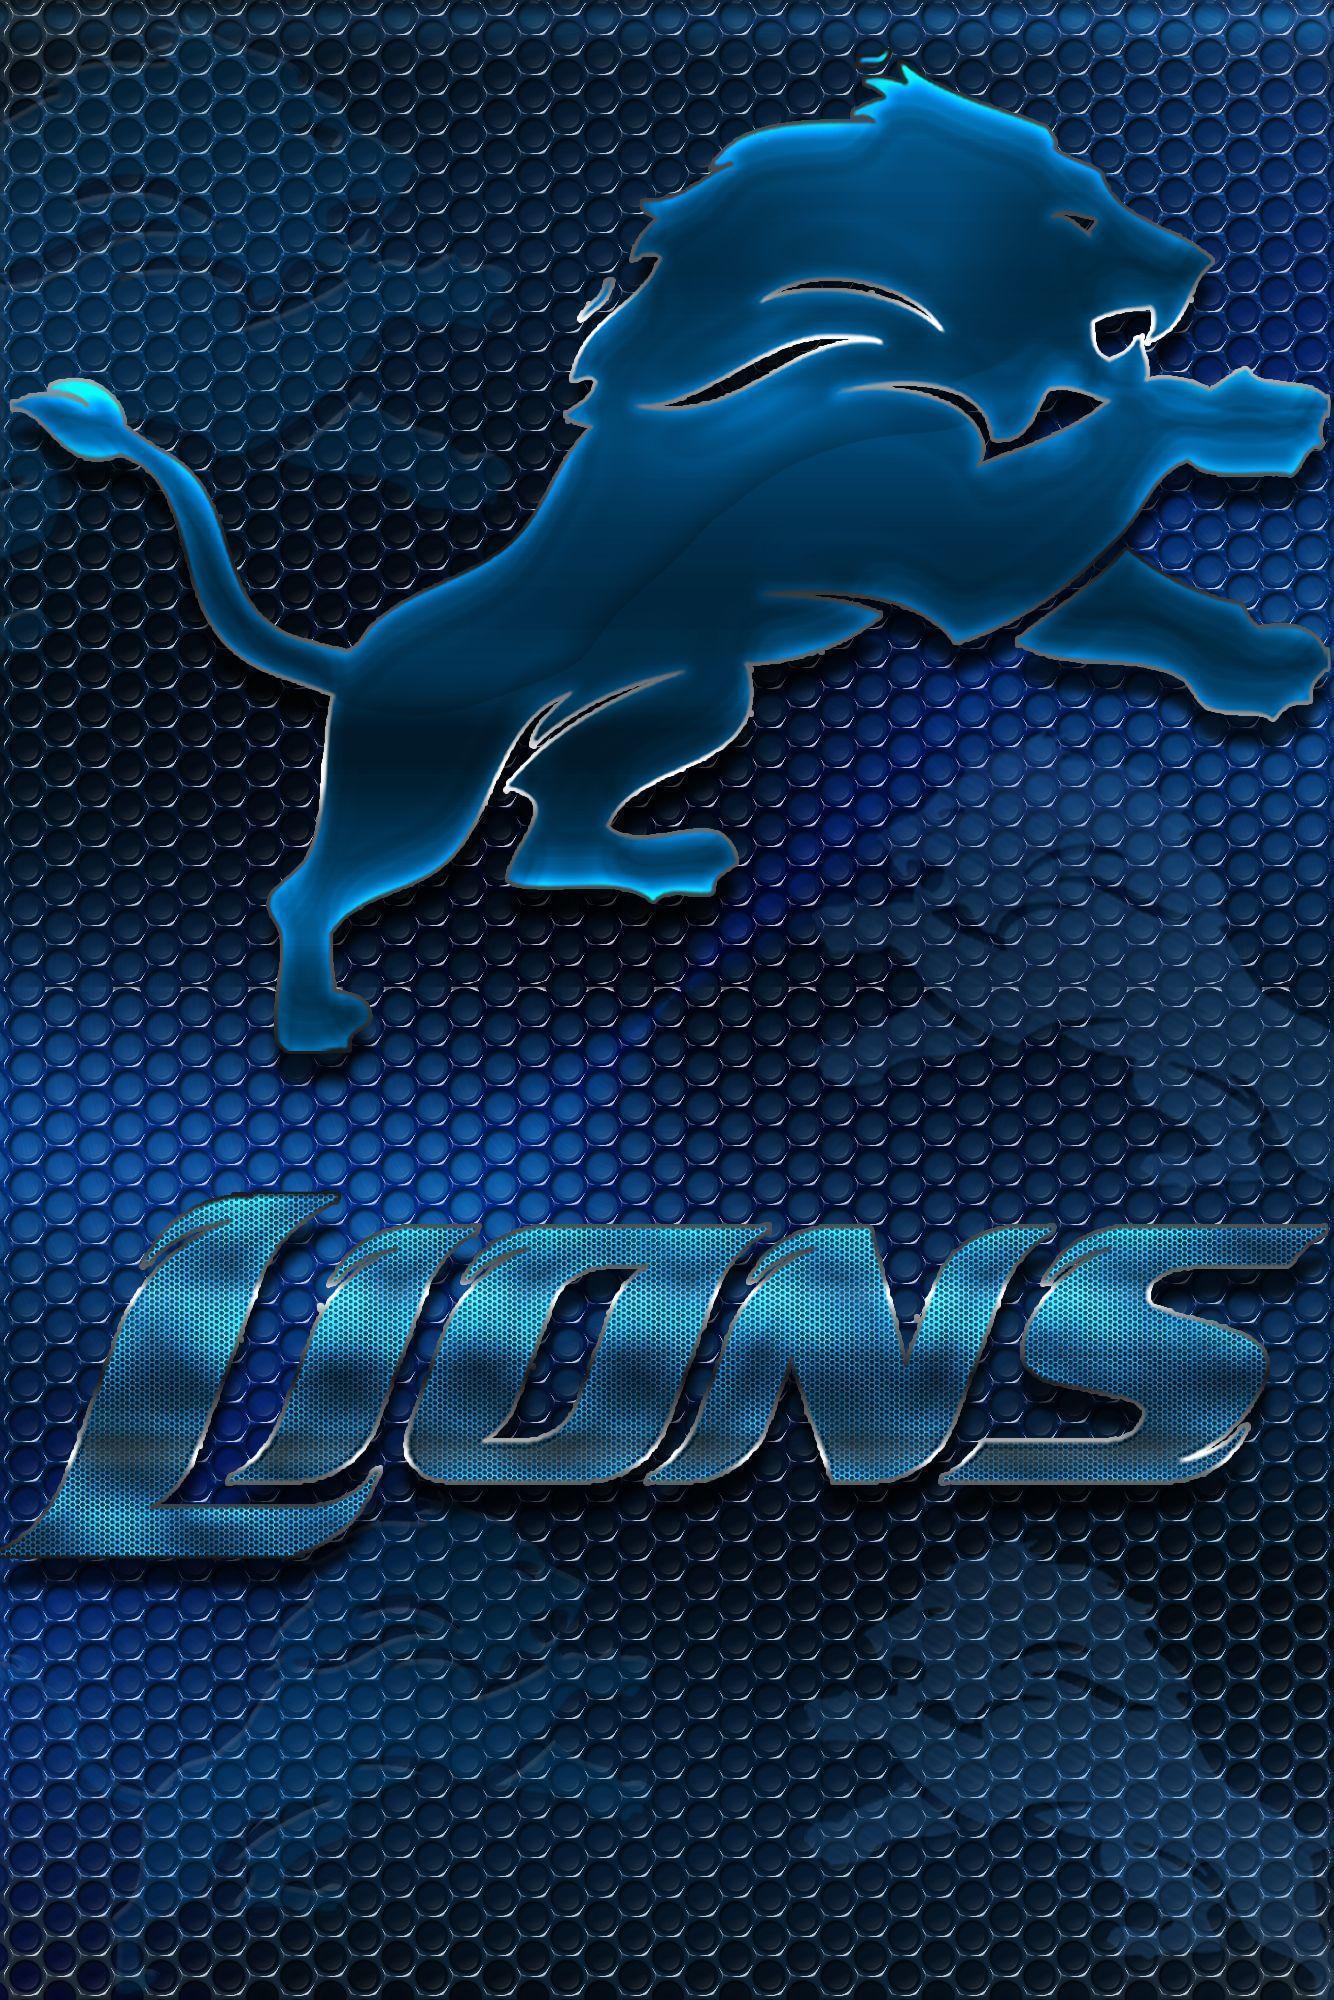 NFL Lions iPhone 6 Wallpaper. Best Games Wallpaper